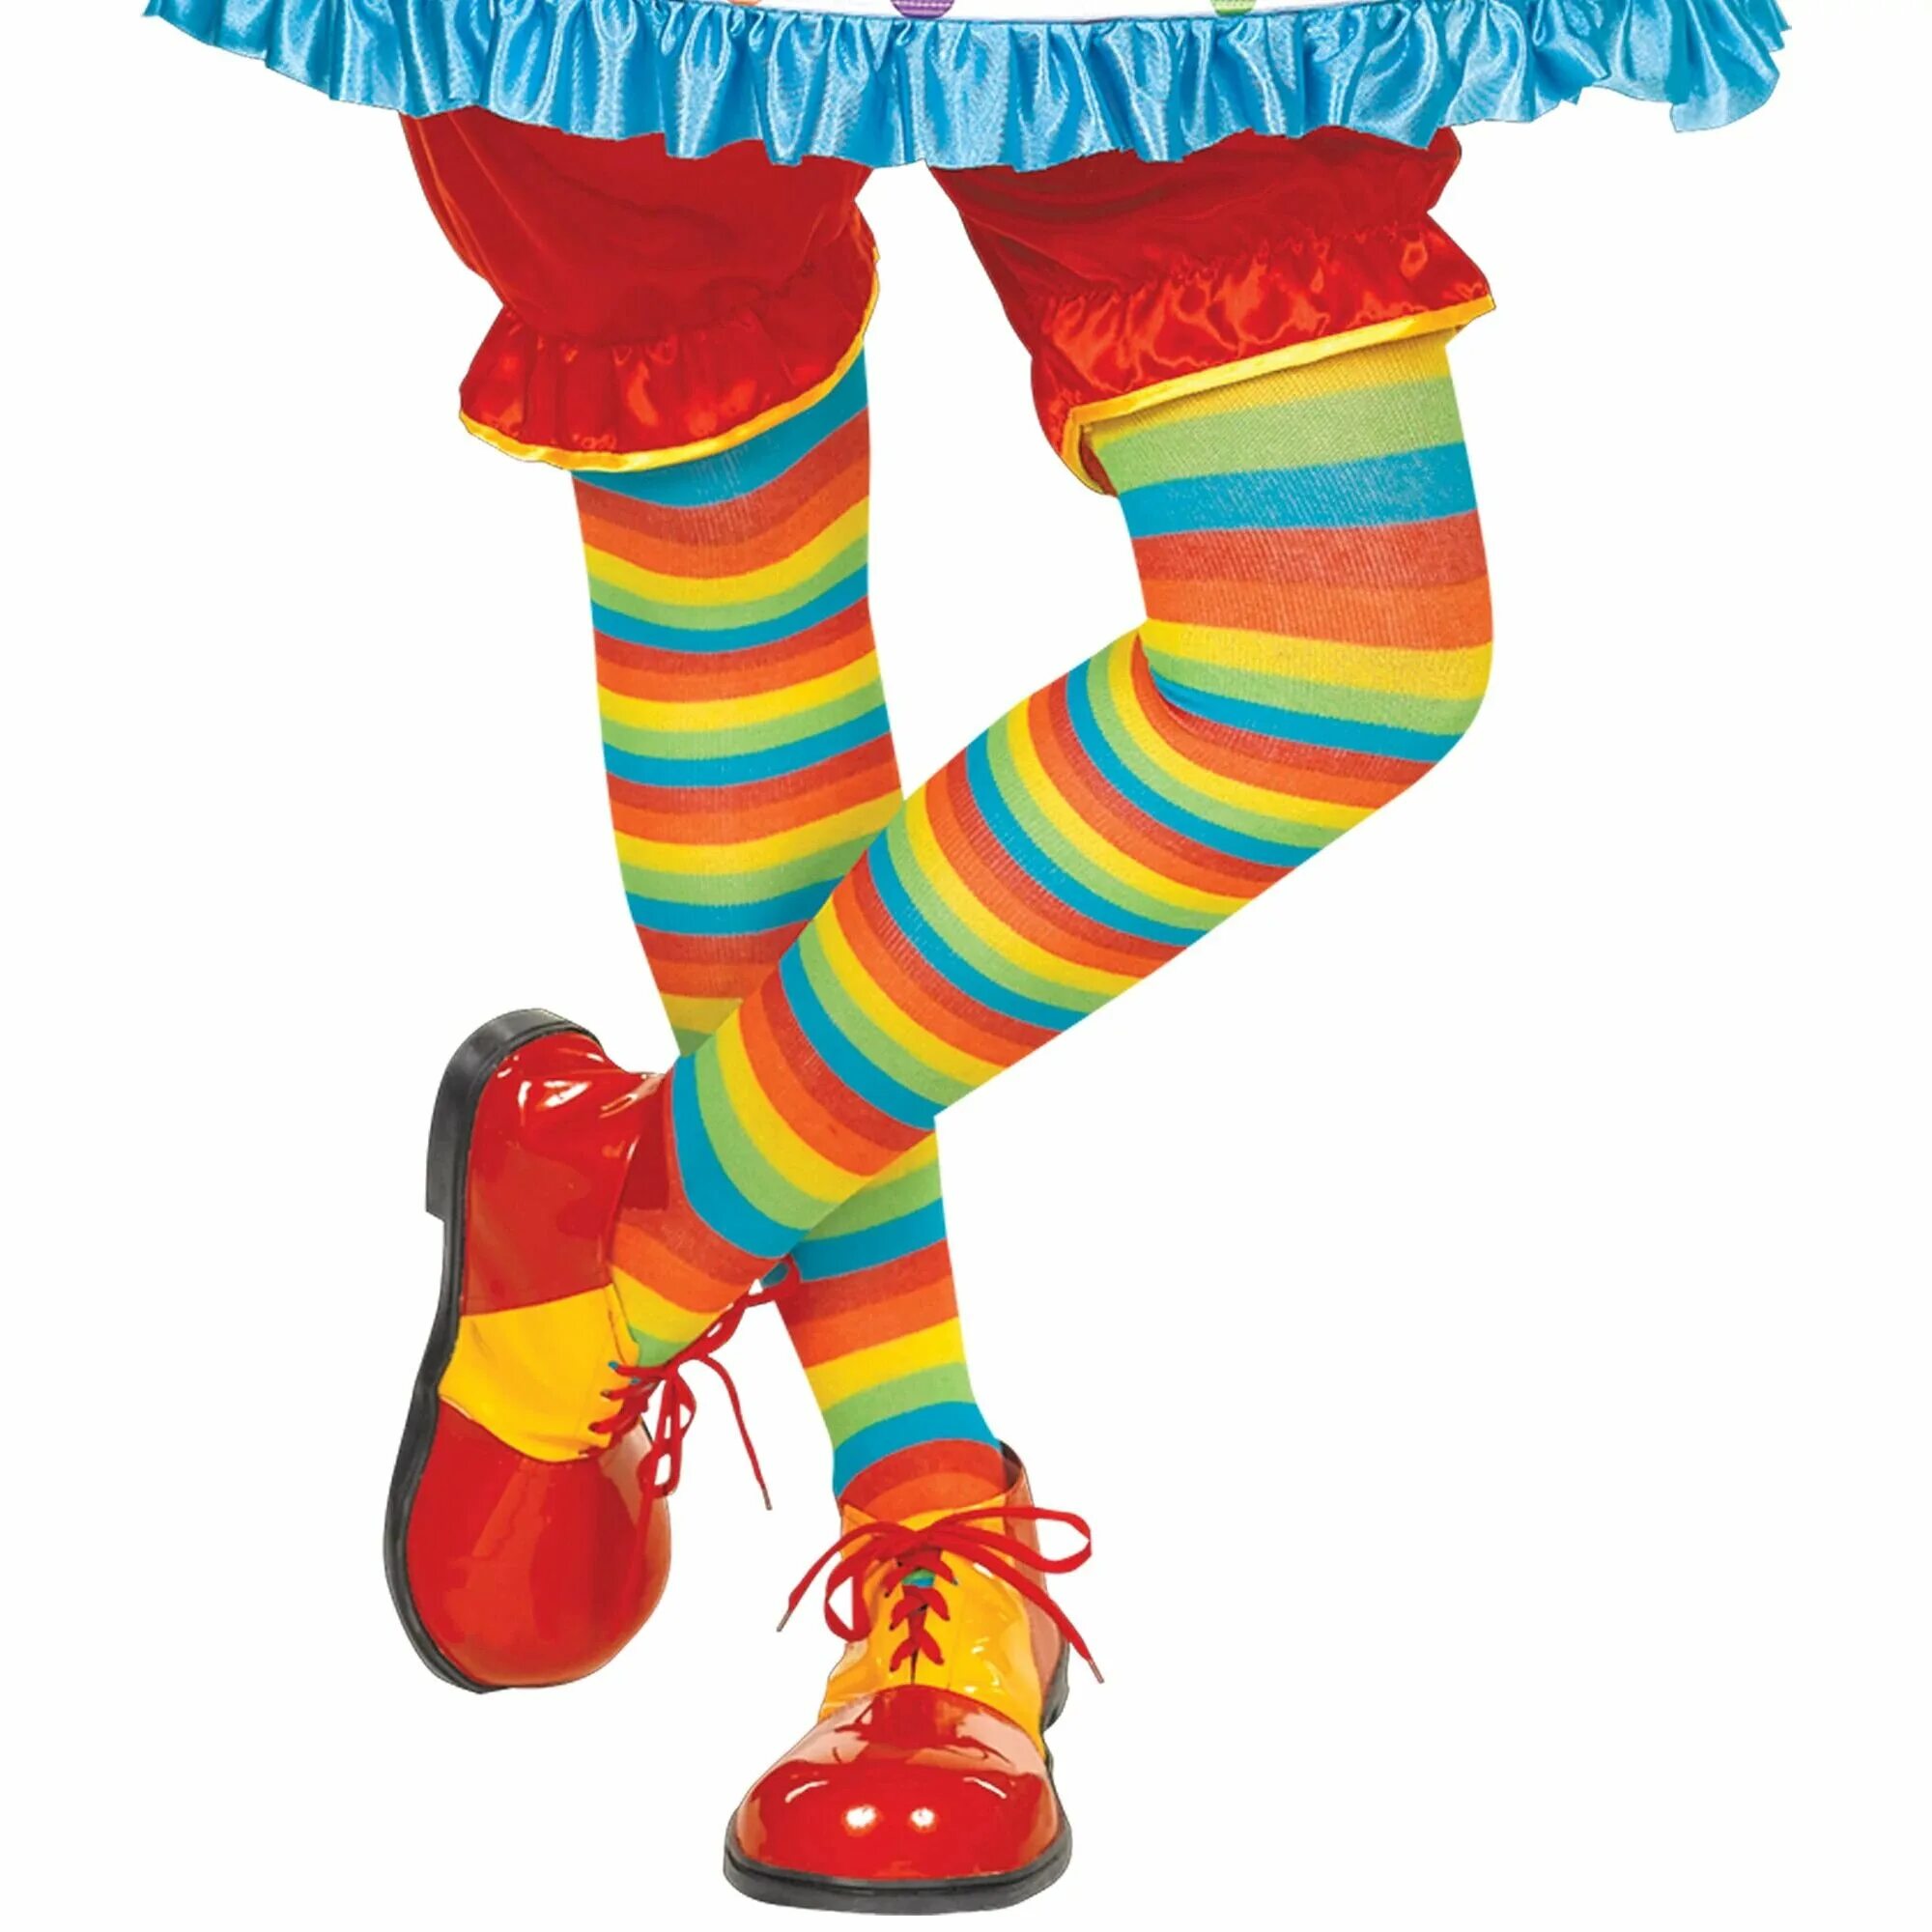 Нога клоуна. Клоун в колготках. Клоунские чулки. Гольфы у клоуна. Колготки полосатые детские.